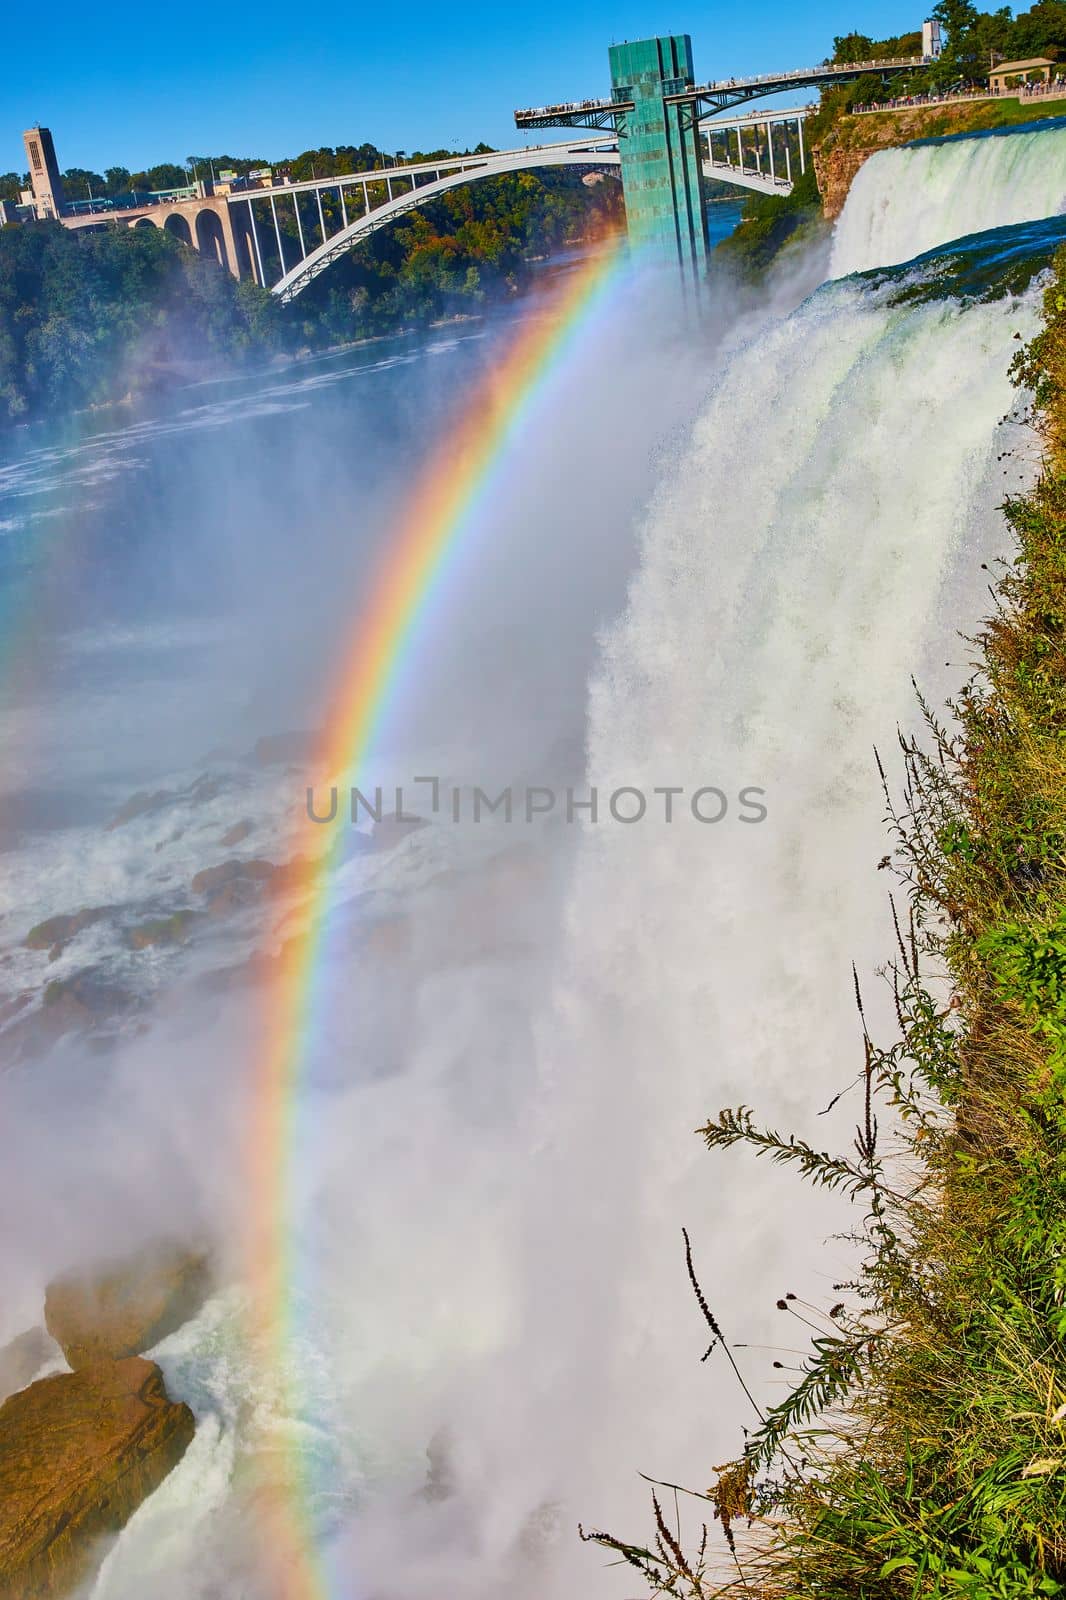 Image of Misty American Falls and Rainbow Bridge with stunning rainbow at Niagara Falls